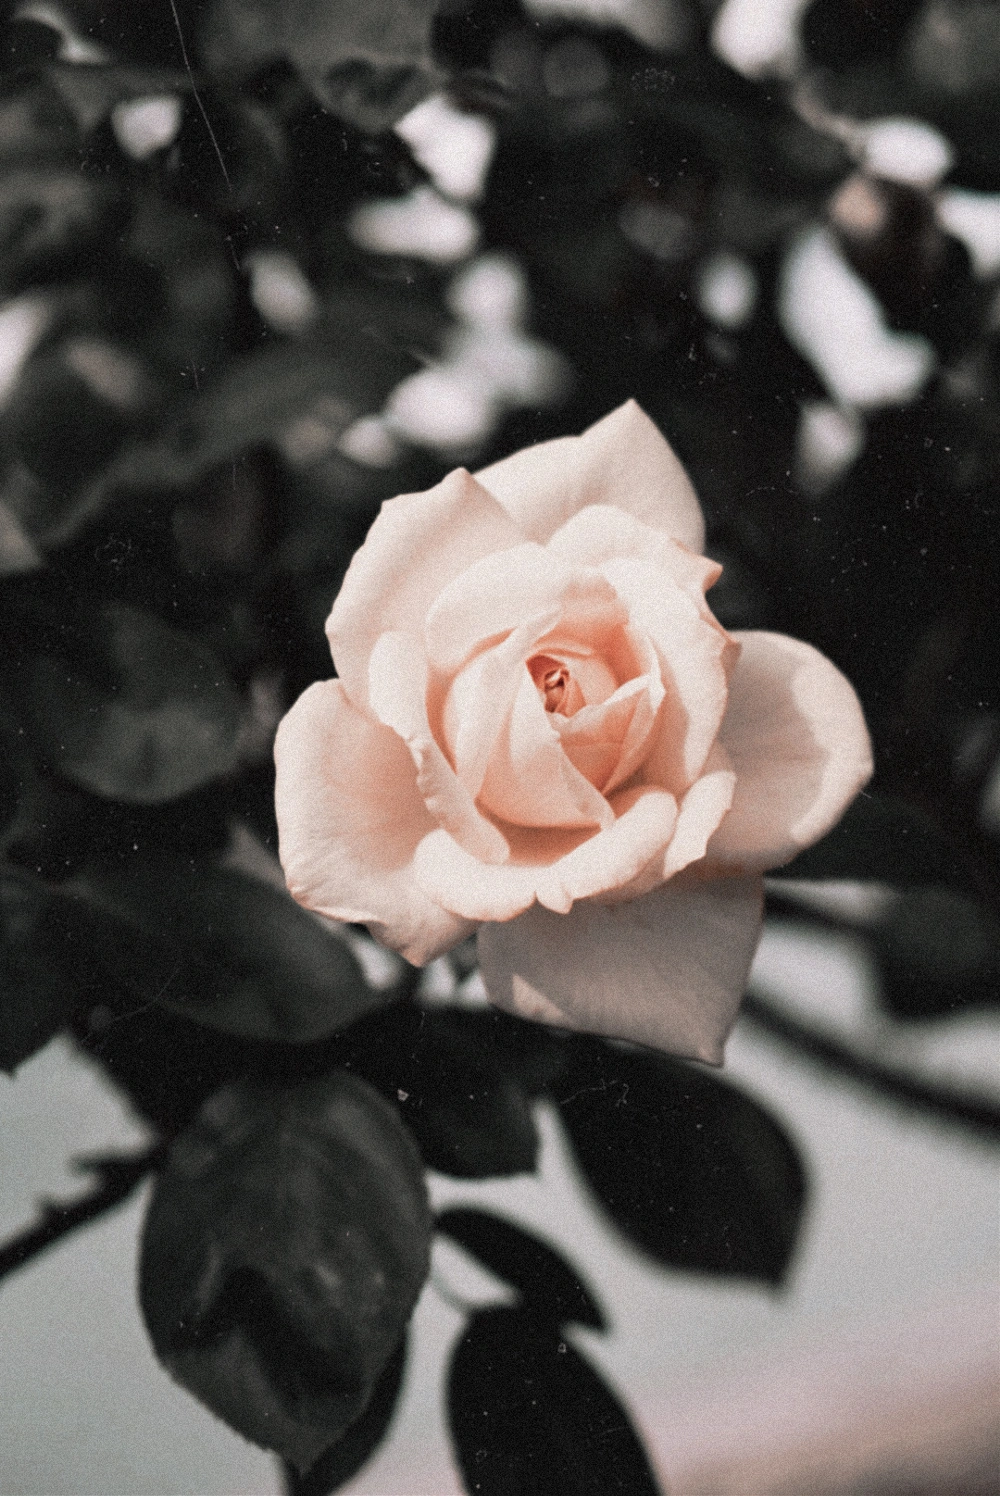 🖤✨

#flower #rose #nature #garden